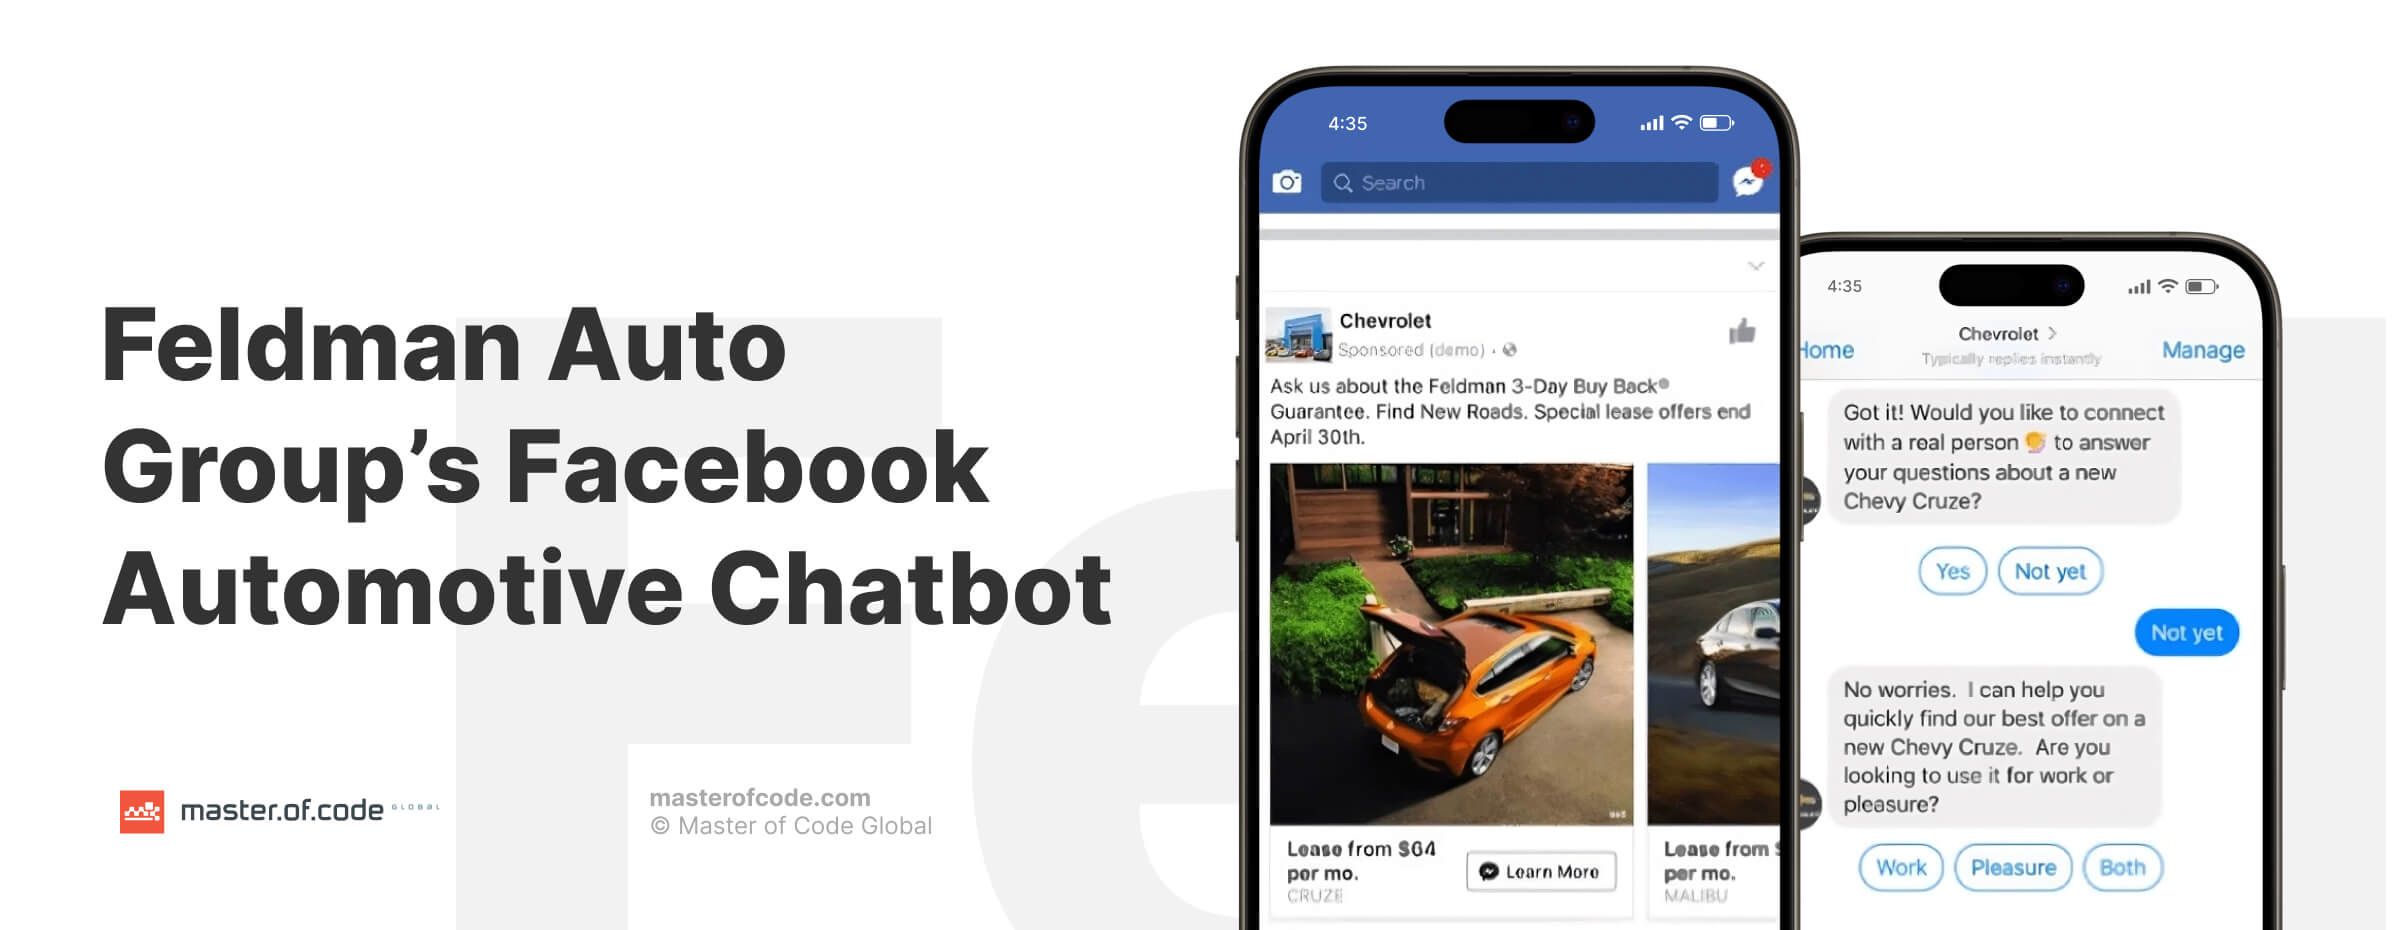 Feldman Auto Group’s Facebook Automotive Chatbot